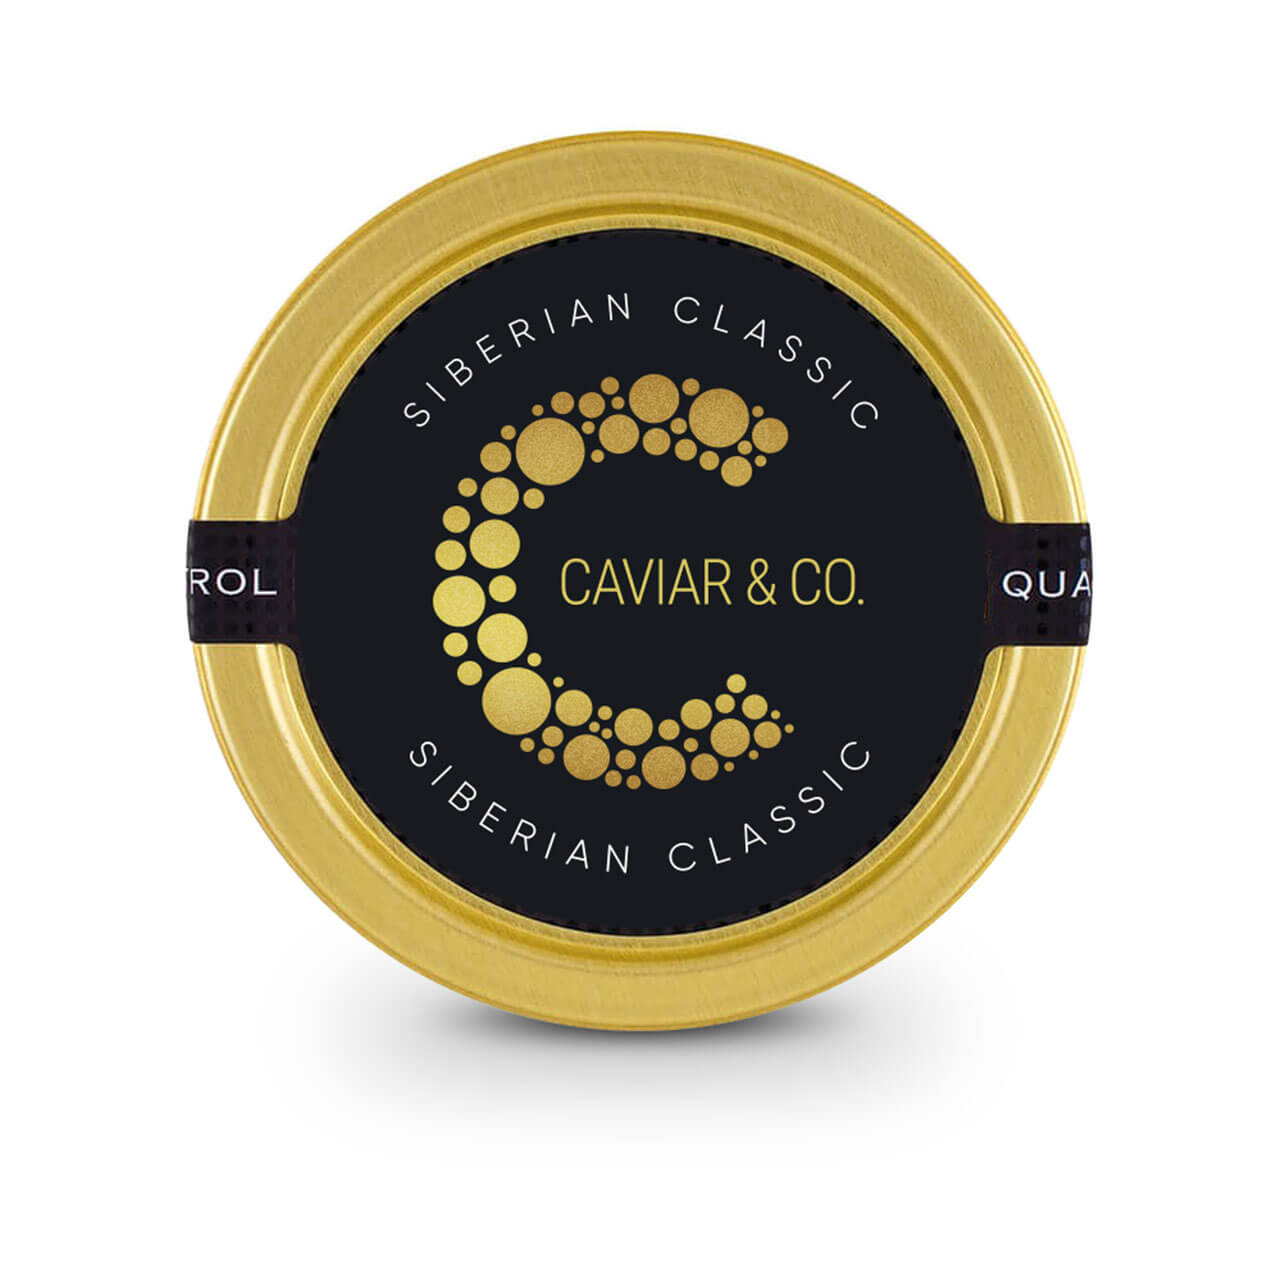 Branding Caviar & Co